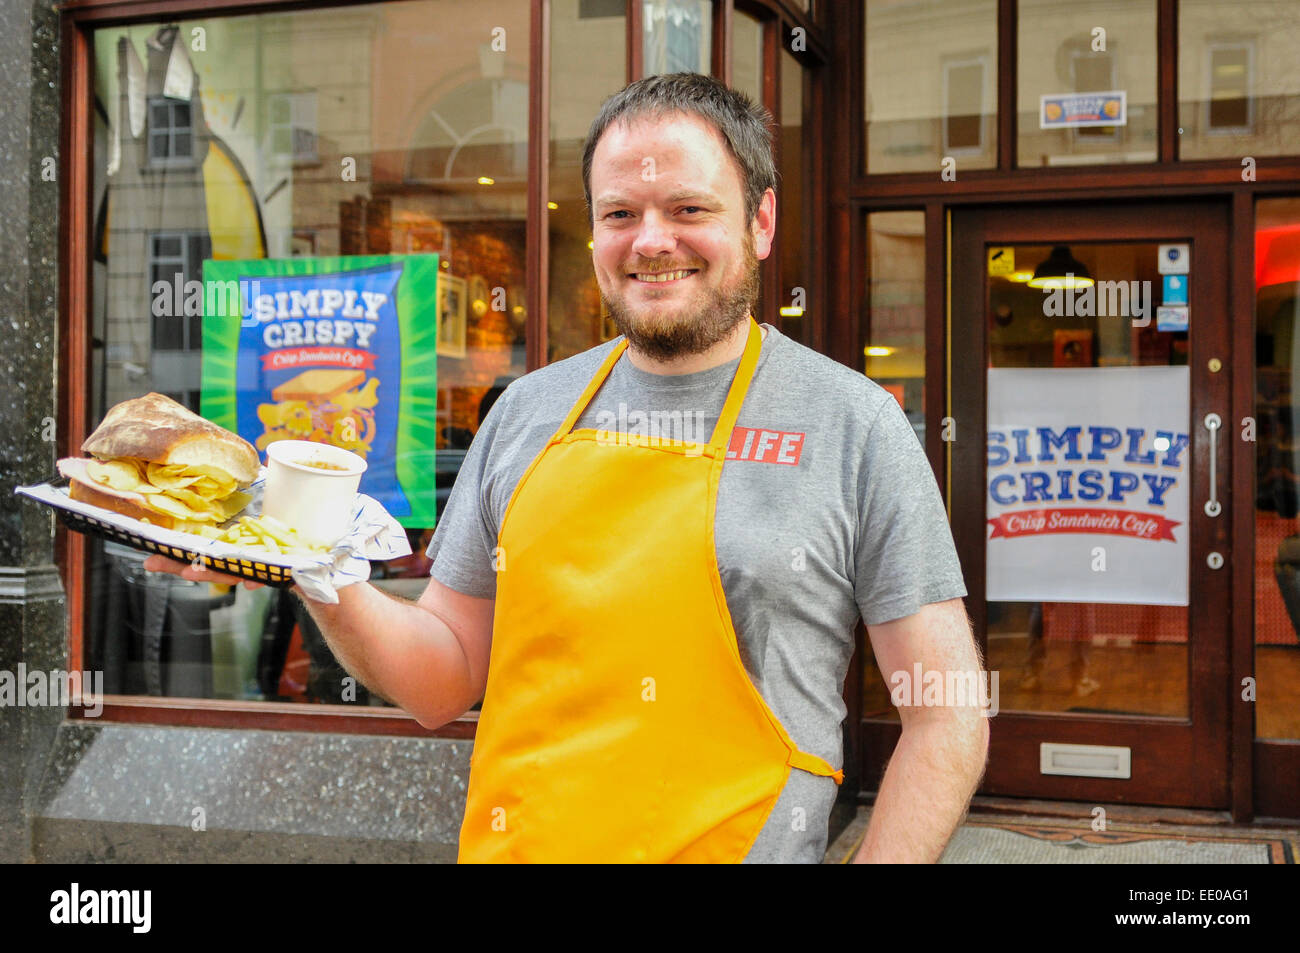 Belfast, Nordirland. 12. Januar 2015. Café-Besitzer Andrew McMenamin öffnet die weltweit erste "Knackig Sandwich" Café Credit: Stephen Barnes/Alamy Live News Stockfoto